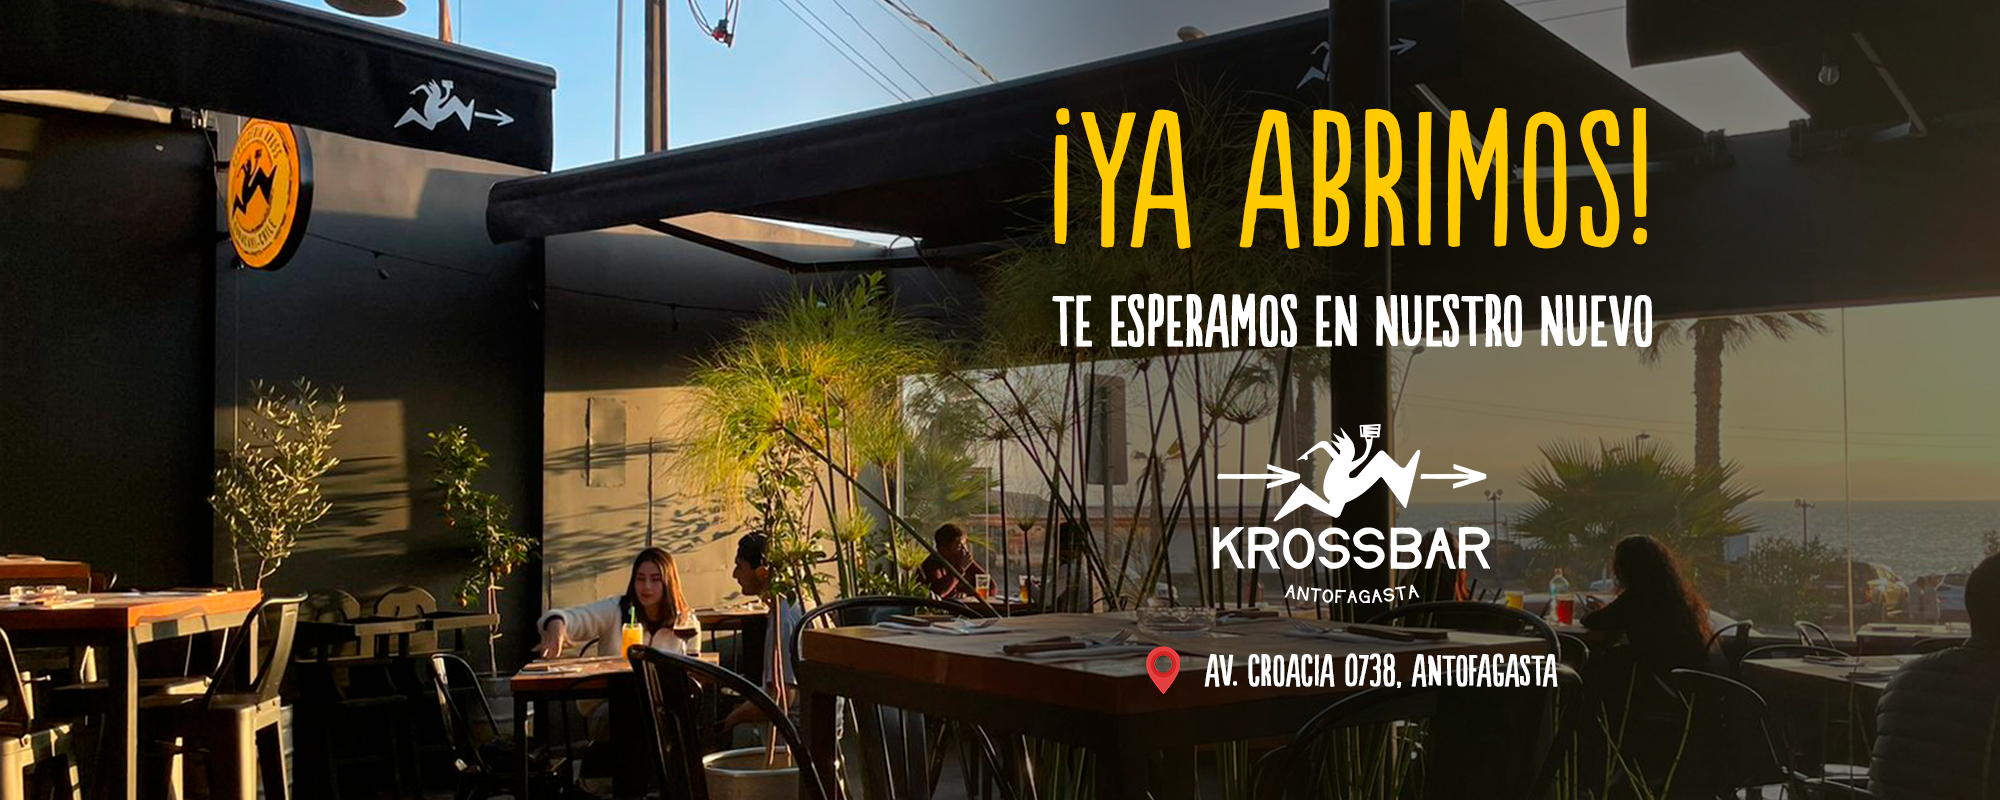 Krossbar Antofagasta - Cerveceria Kross